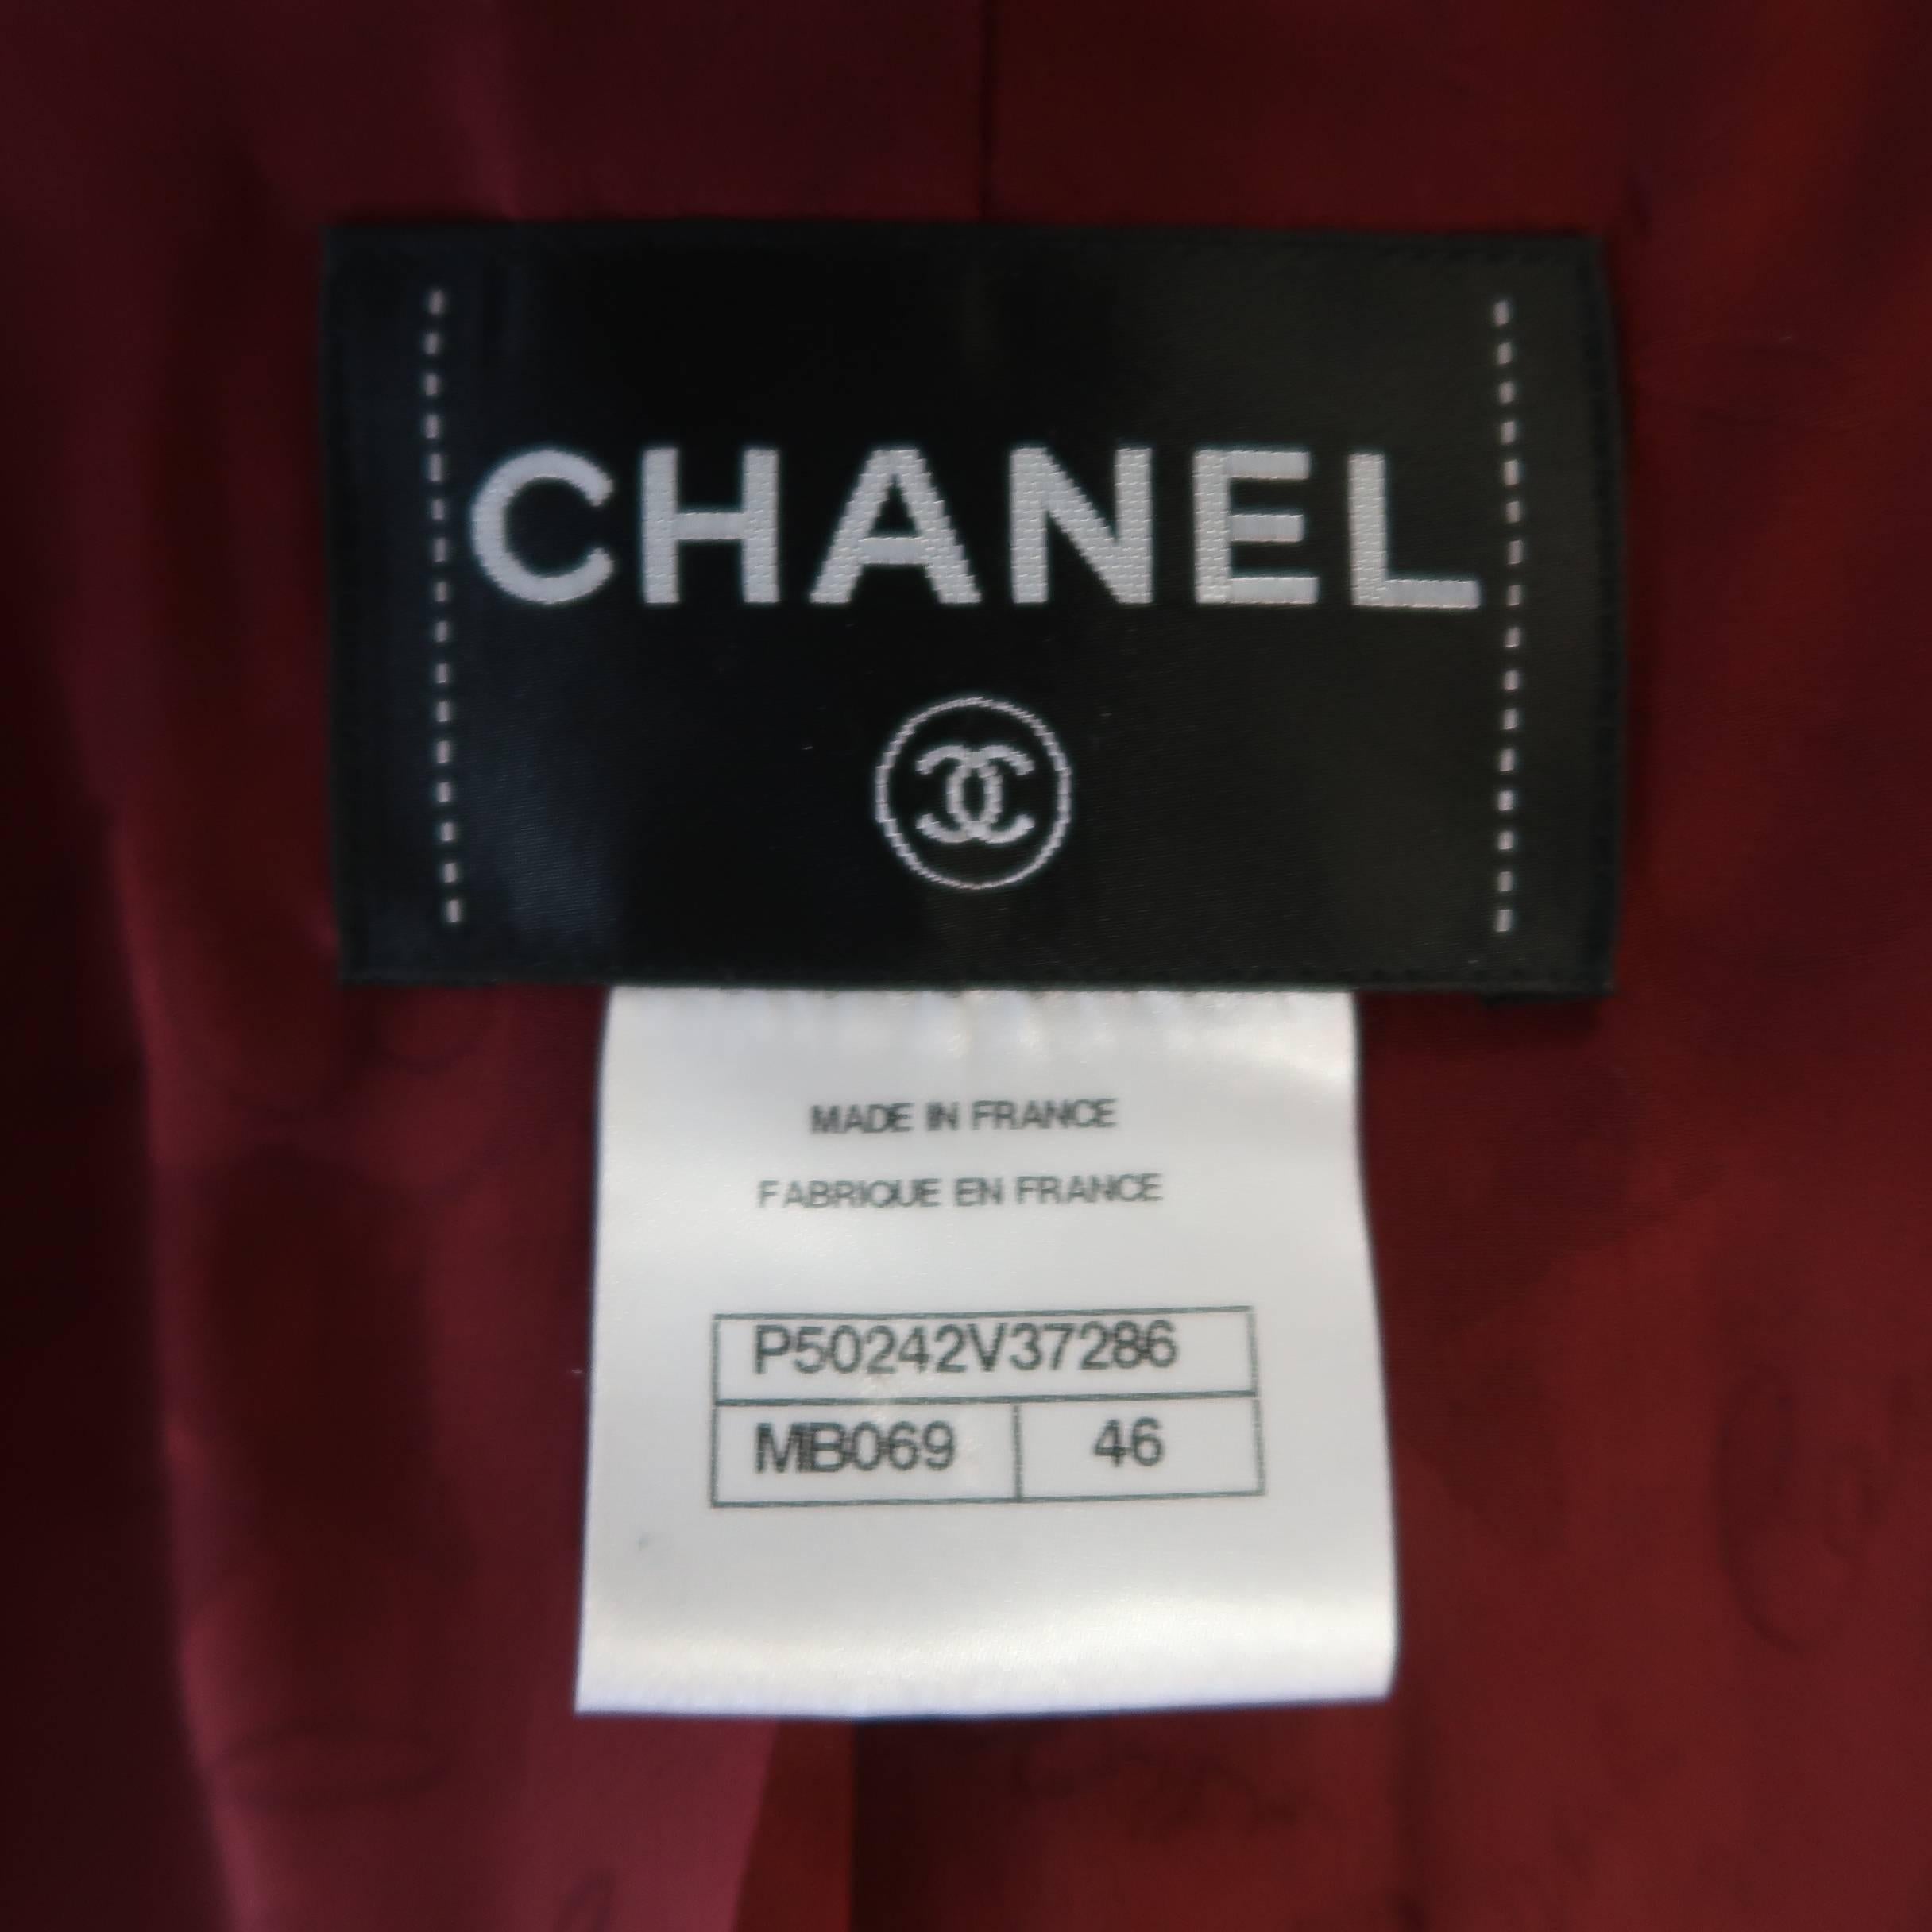 Chanel Coat - Fall 2014 Runway - Burgundy & Green Textured Boucle Jacket 4